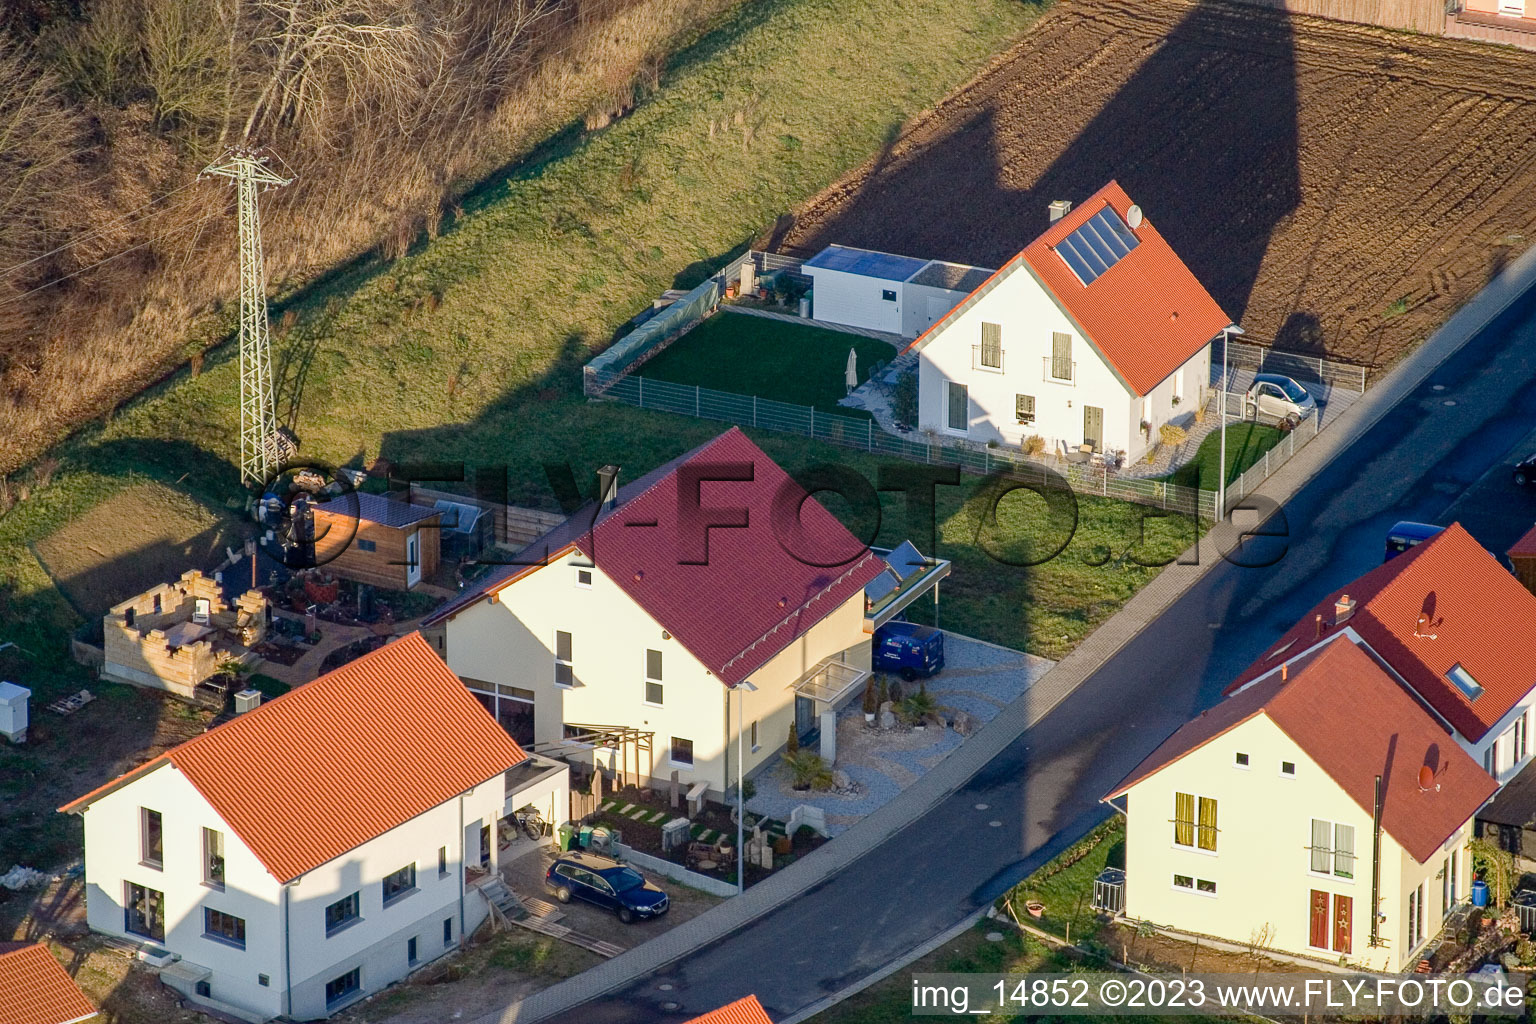 District Schaidt in Wörth am Rhein in the state Rhineland-Palatinate, Germany from a drone